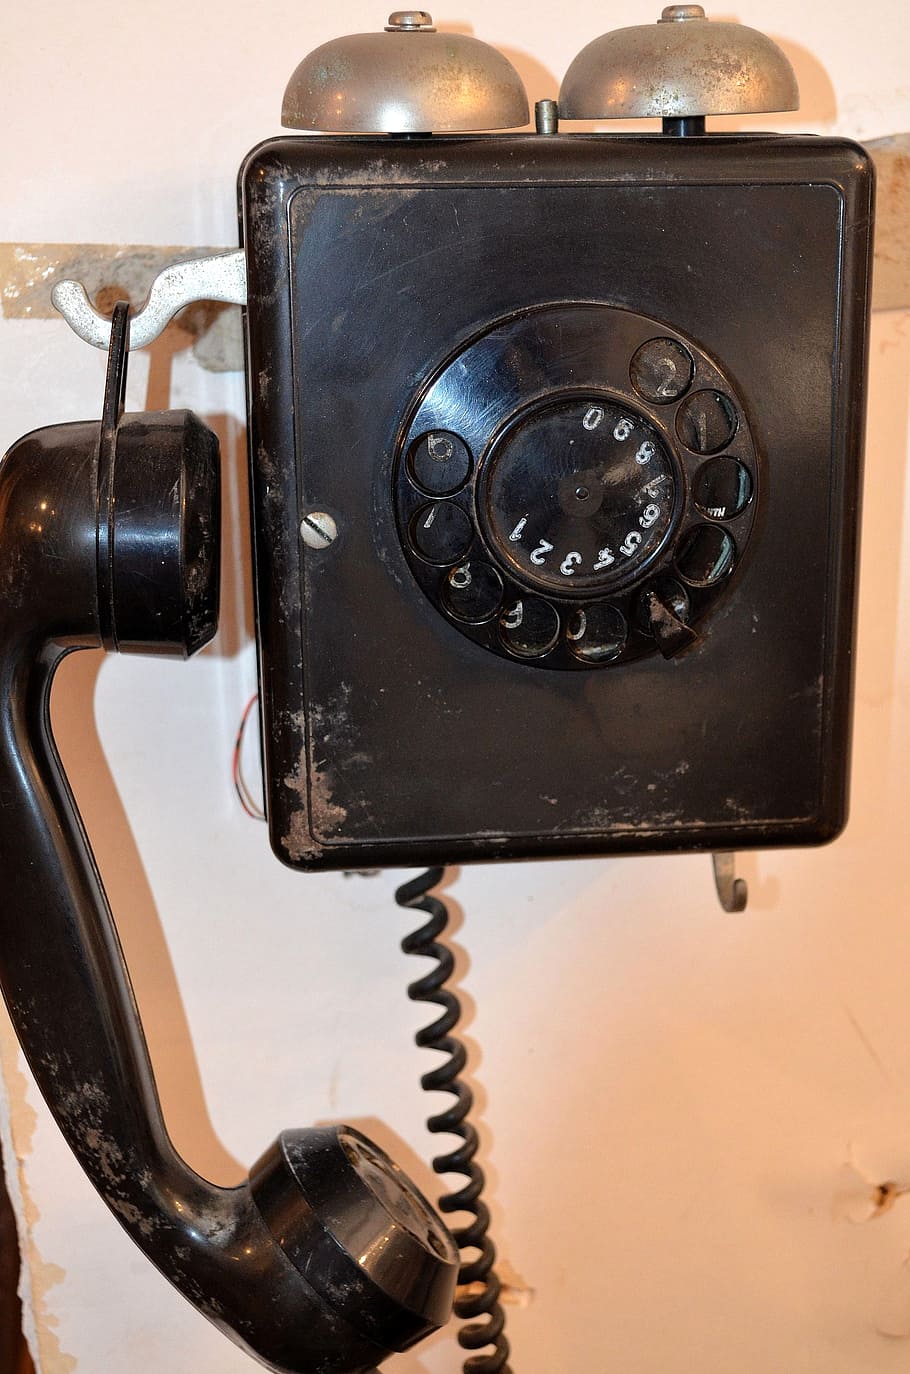 Velho, Telefone, Discagem, Vintage, telefone antigo, telefone fixo, nostalgia, aparelho de telefone, analógico, tecnologia